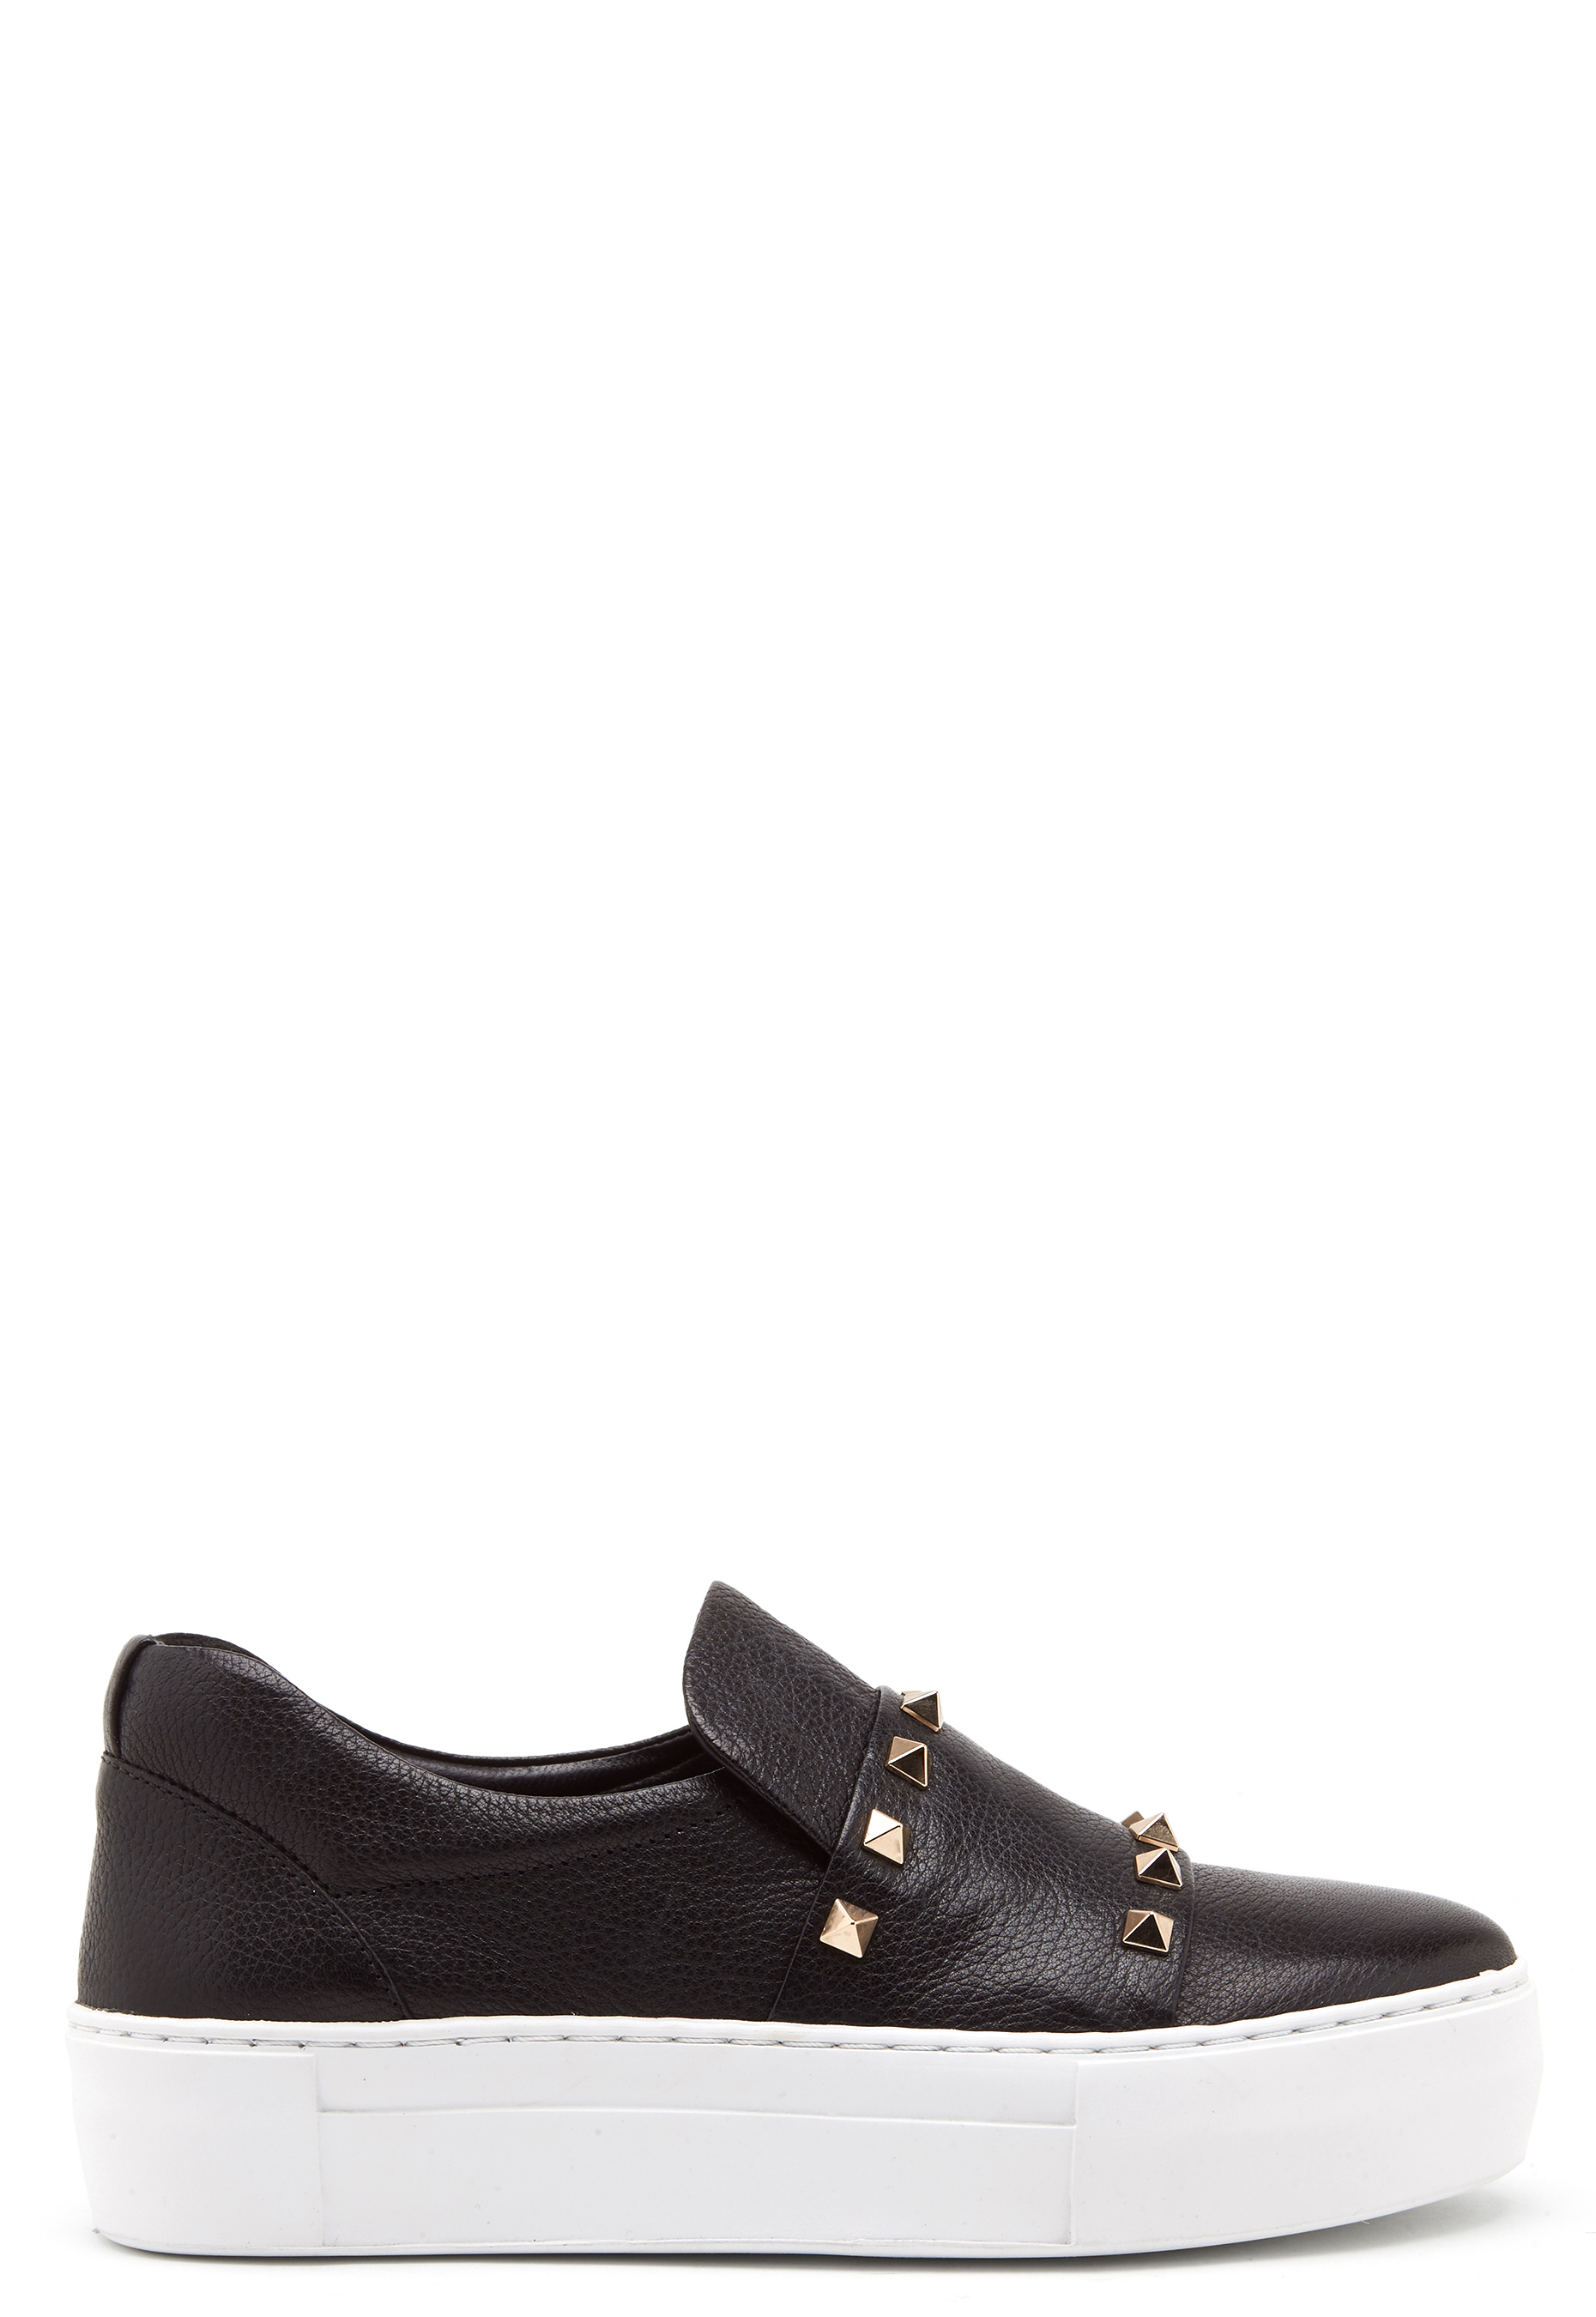 Billi Buffalo Leather Shoes 802 Black/Gold -